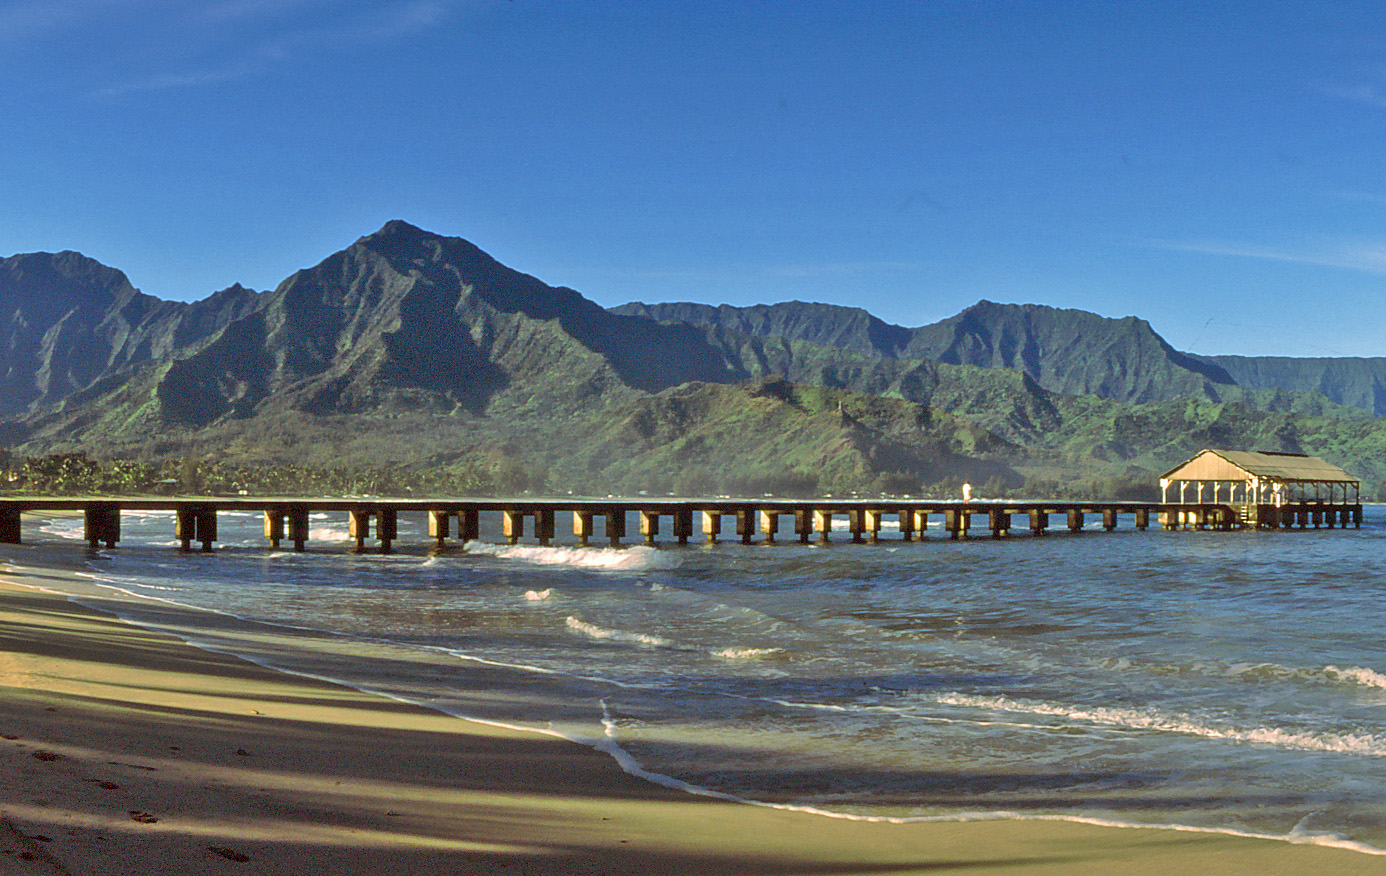 File:Hanalei Pier Kauai.jpg - Wikimedia Commons